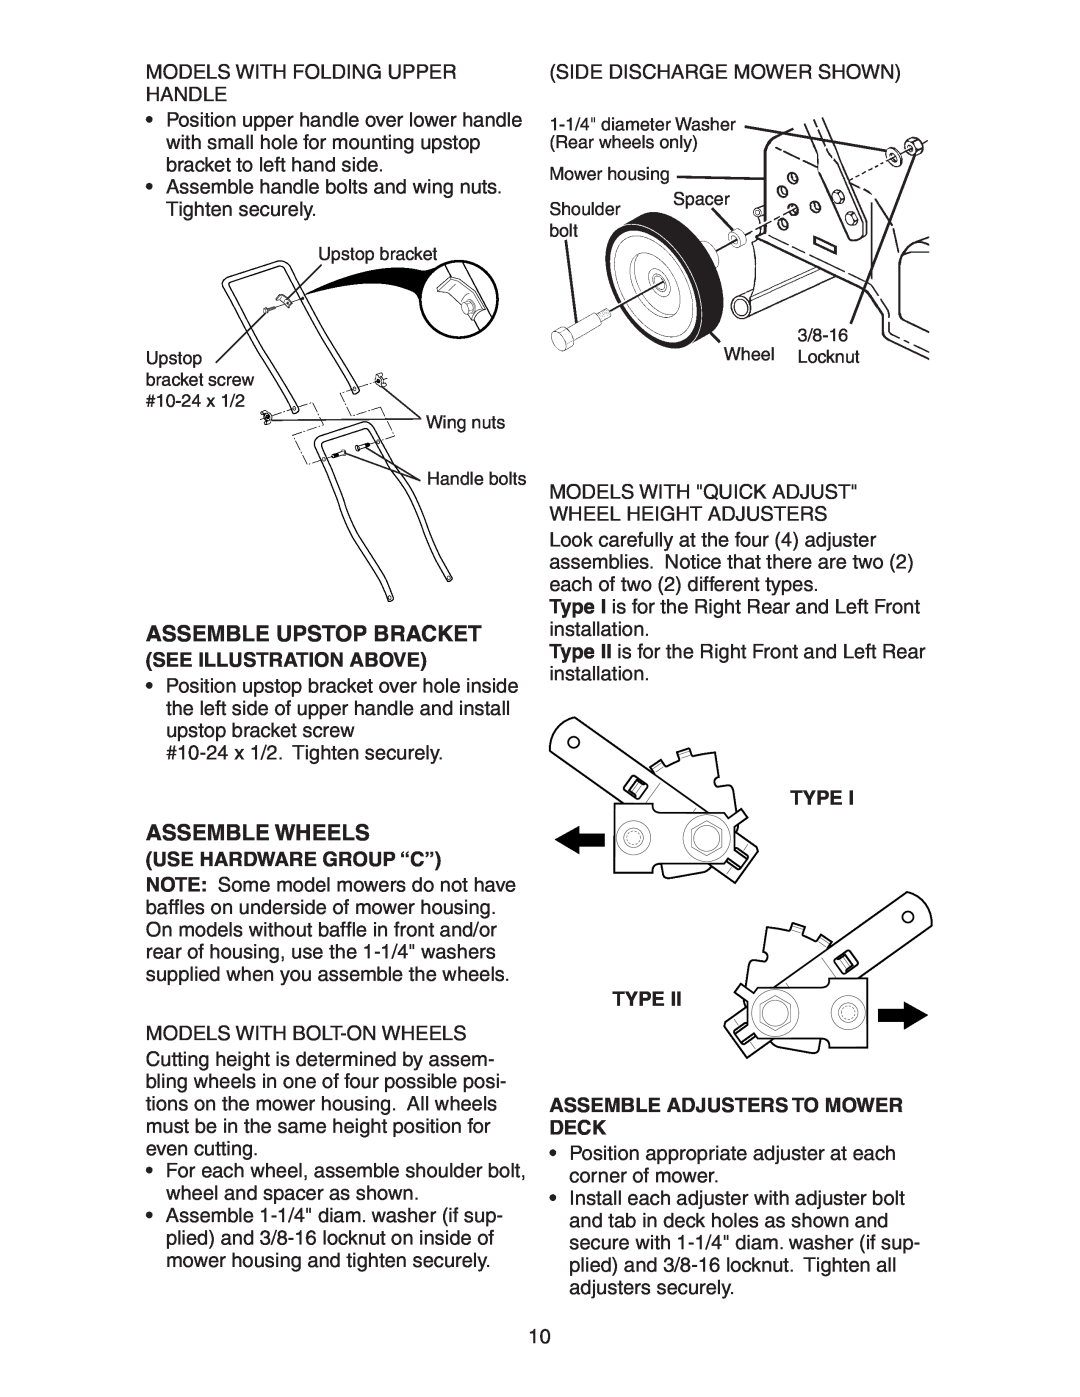 Poulan 172777 manual Assemble Upstop Bracket, Assemble Wheels, See Illustration Above, Use Hardware Group “C” 